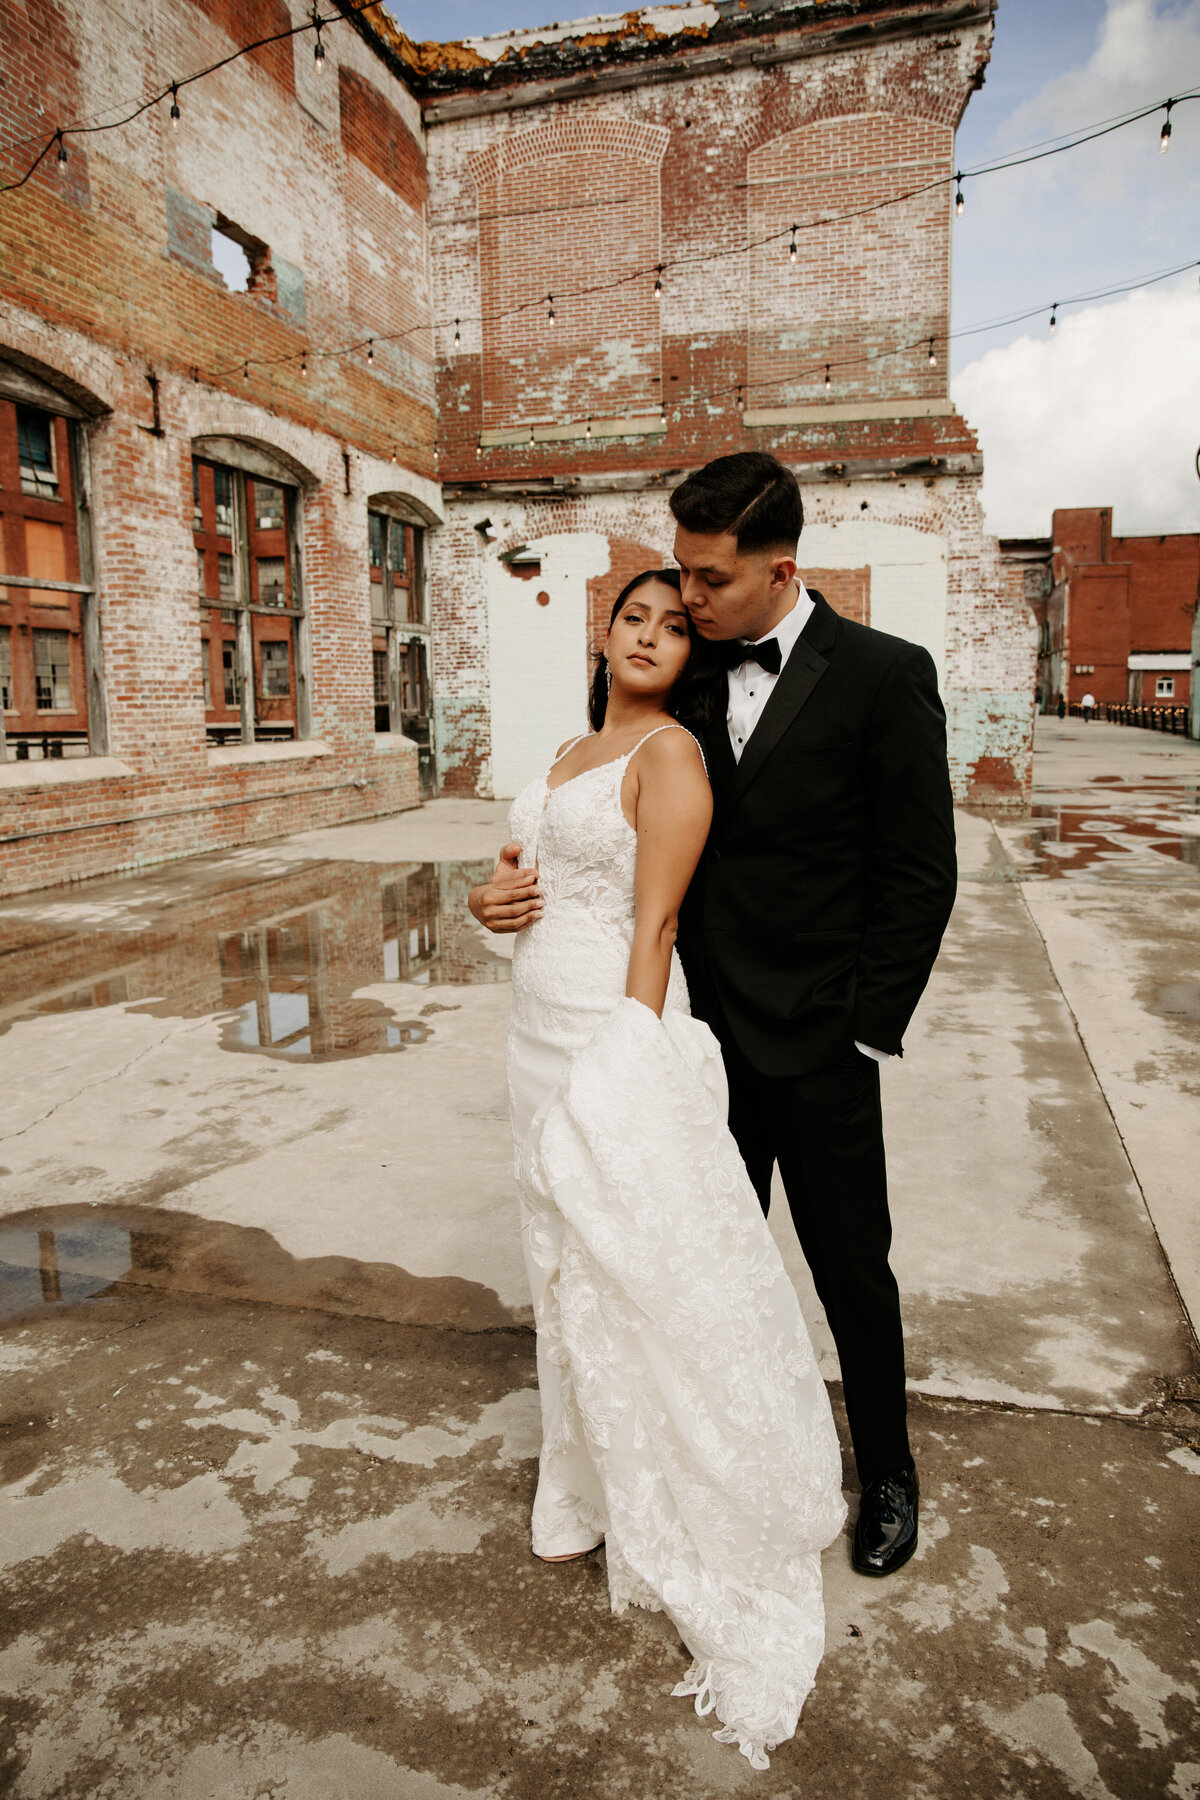 latin-couple-wedding-portrait2-industrial-venue-simplamor-photography